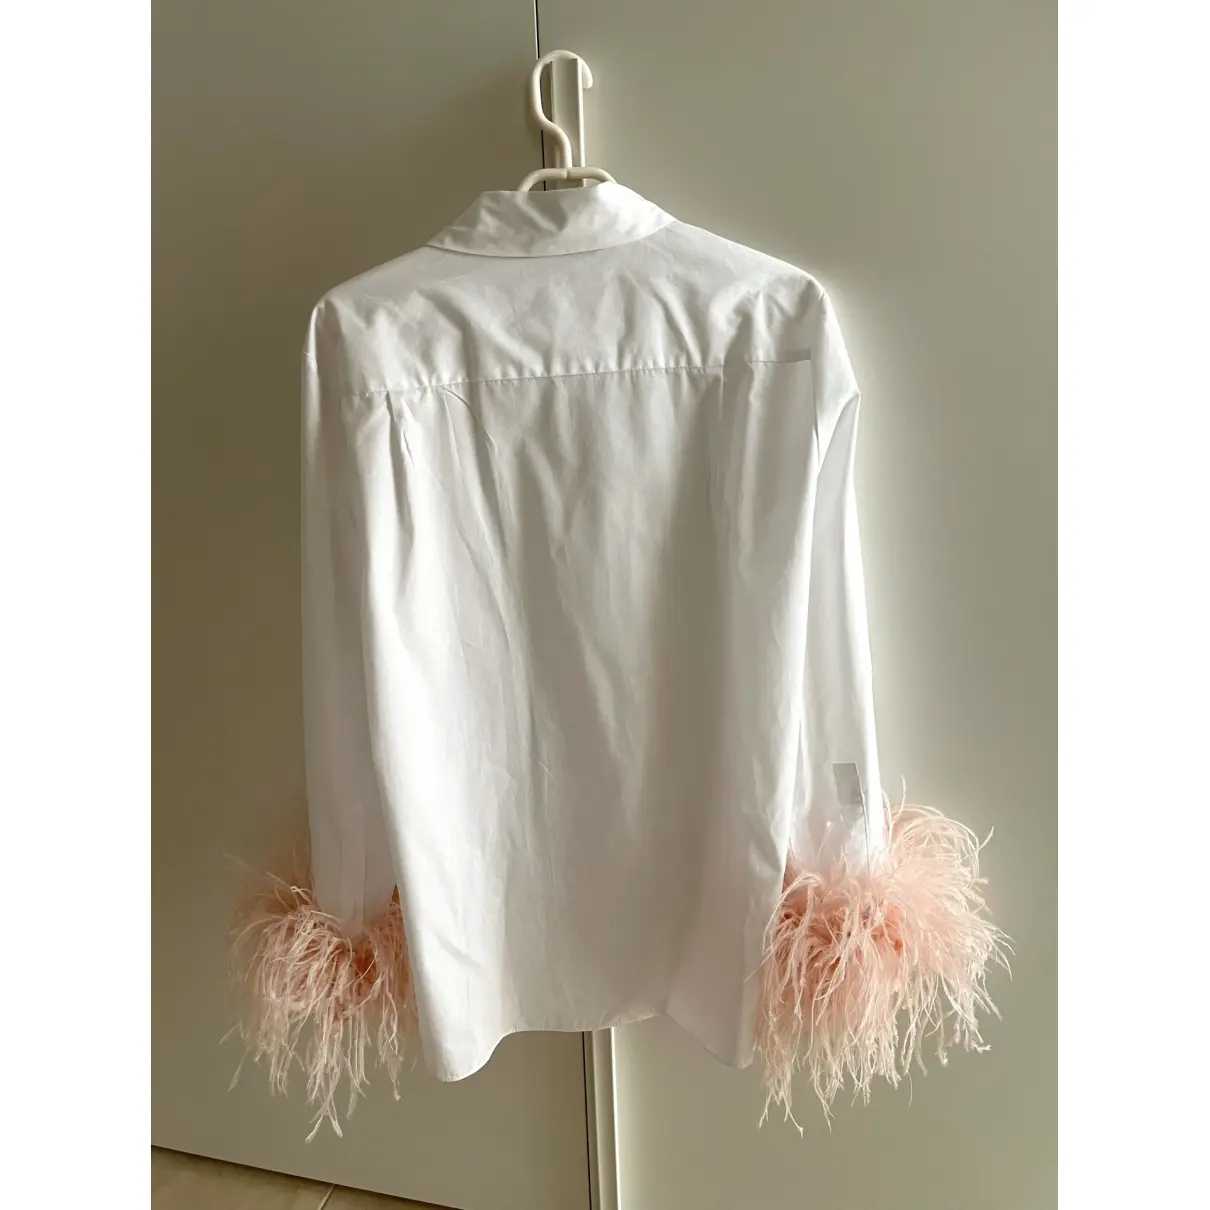 Buy Zara Shirt online